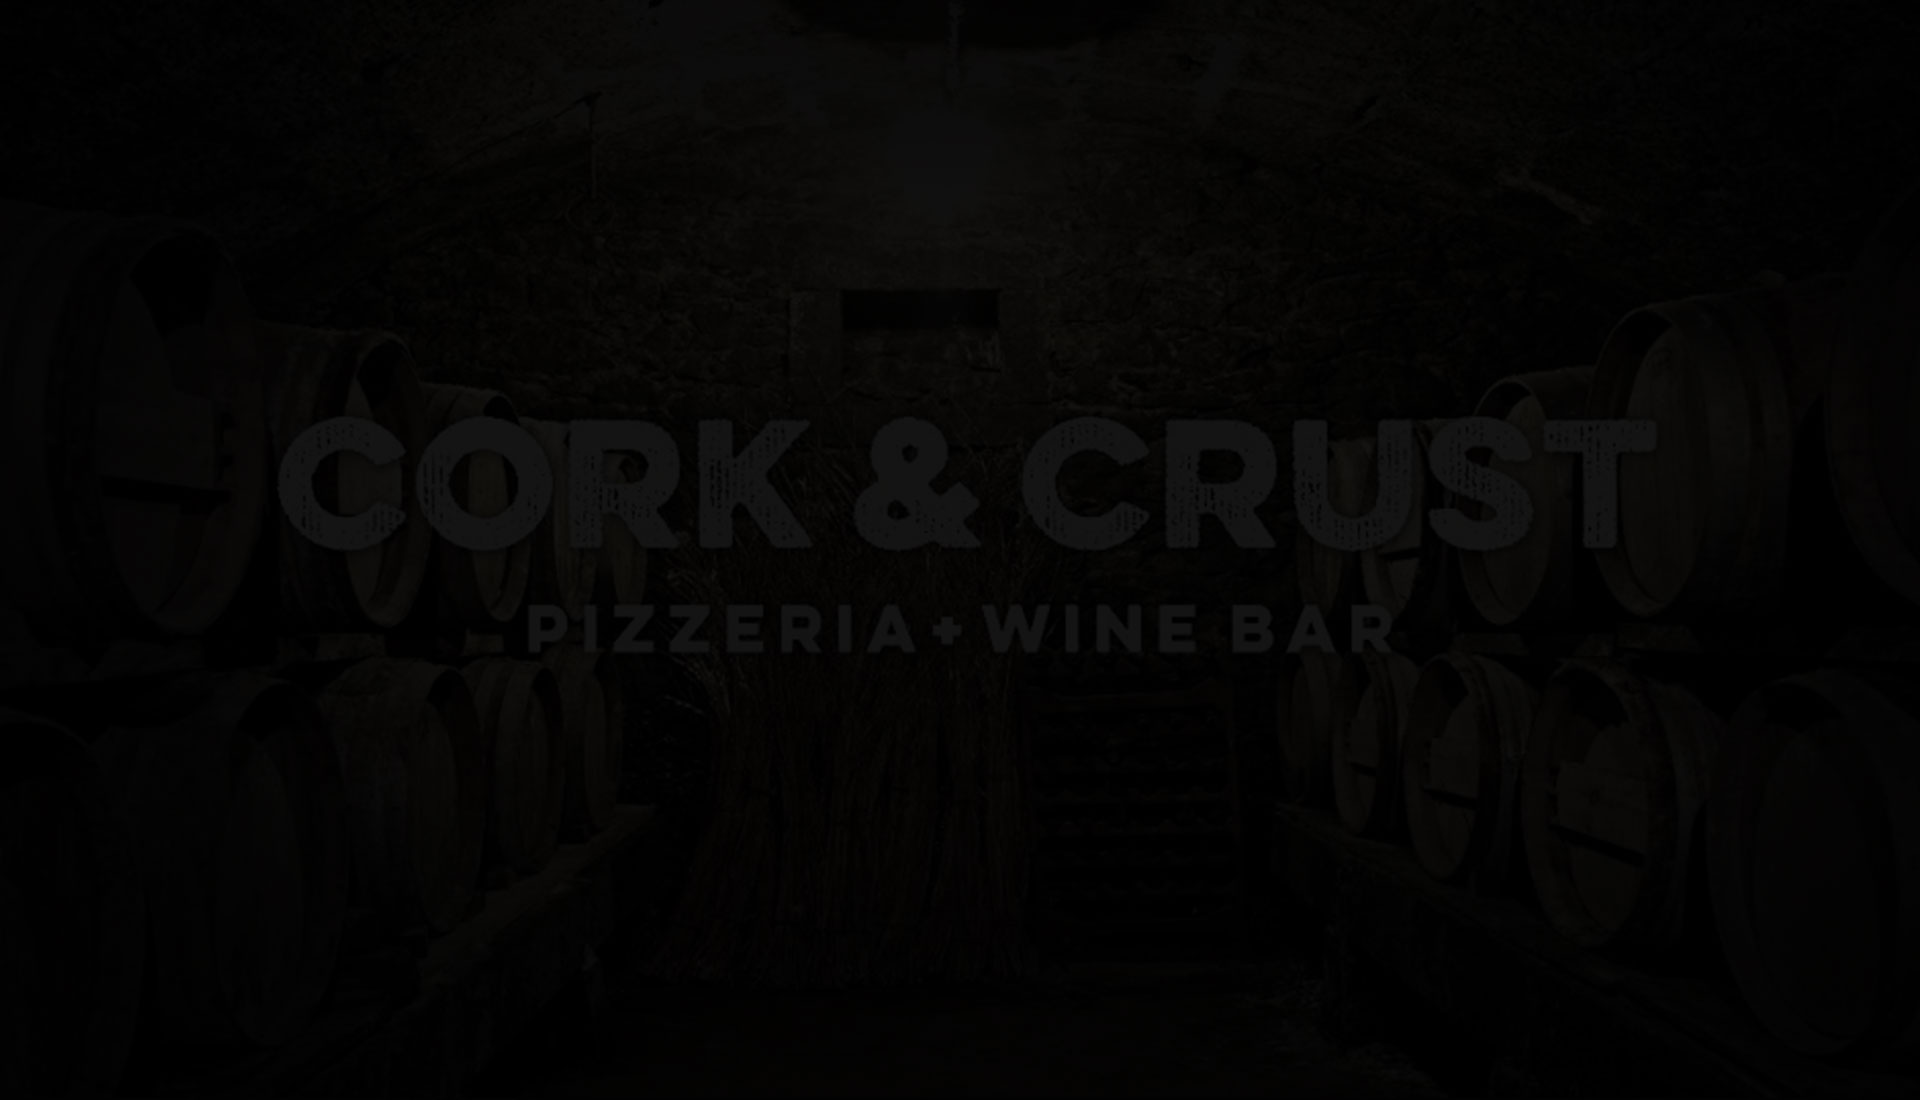 Cork and Crust Pizzeria, Pizza , Wine, Wine Bar, Madison, Alabama, best pizza